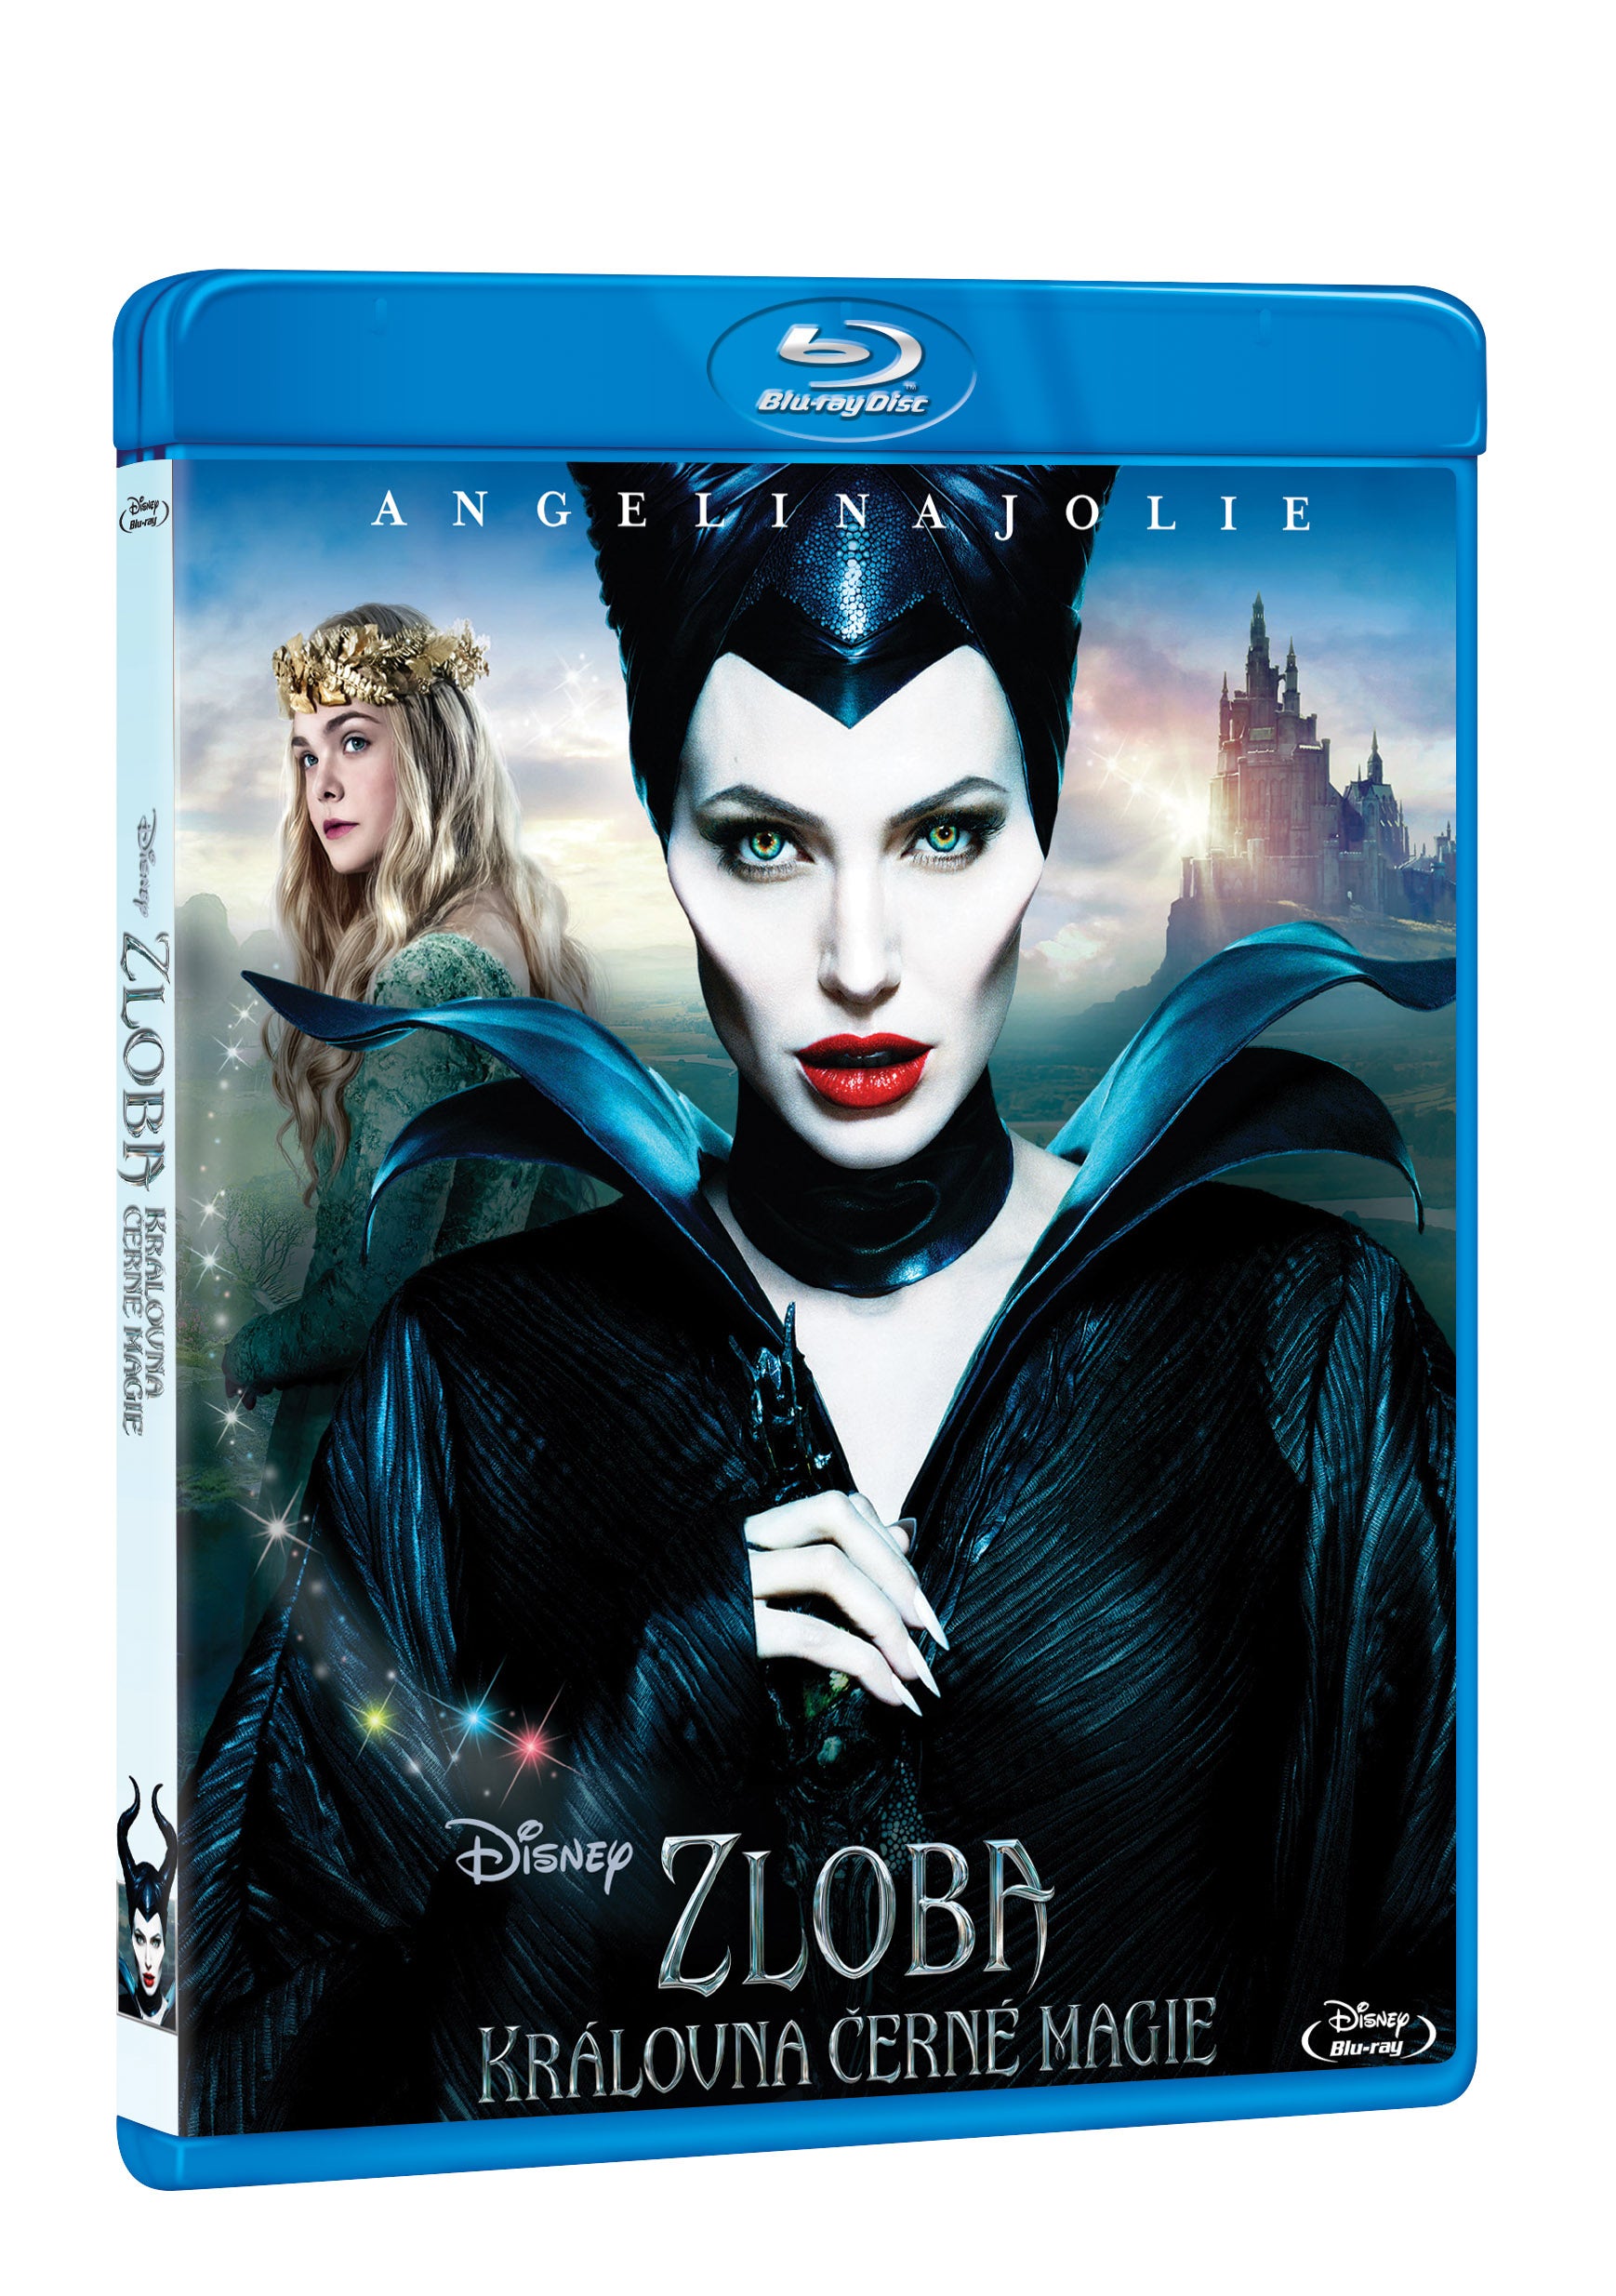 Zloba – Kralovna cerne magie BD / Maleficent - Czech version